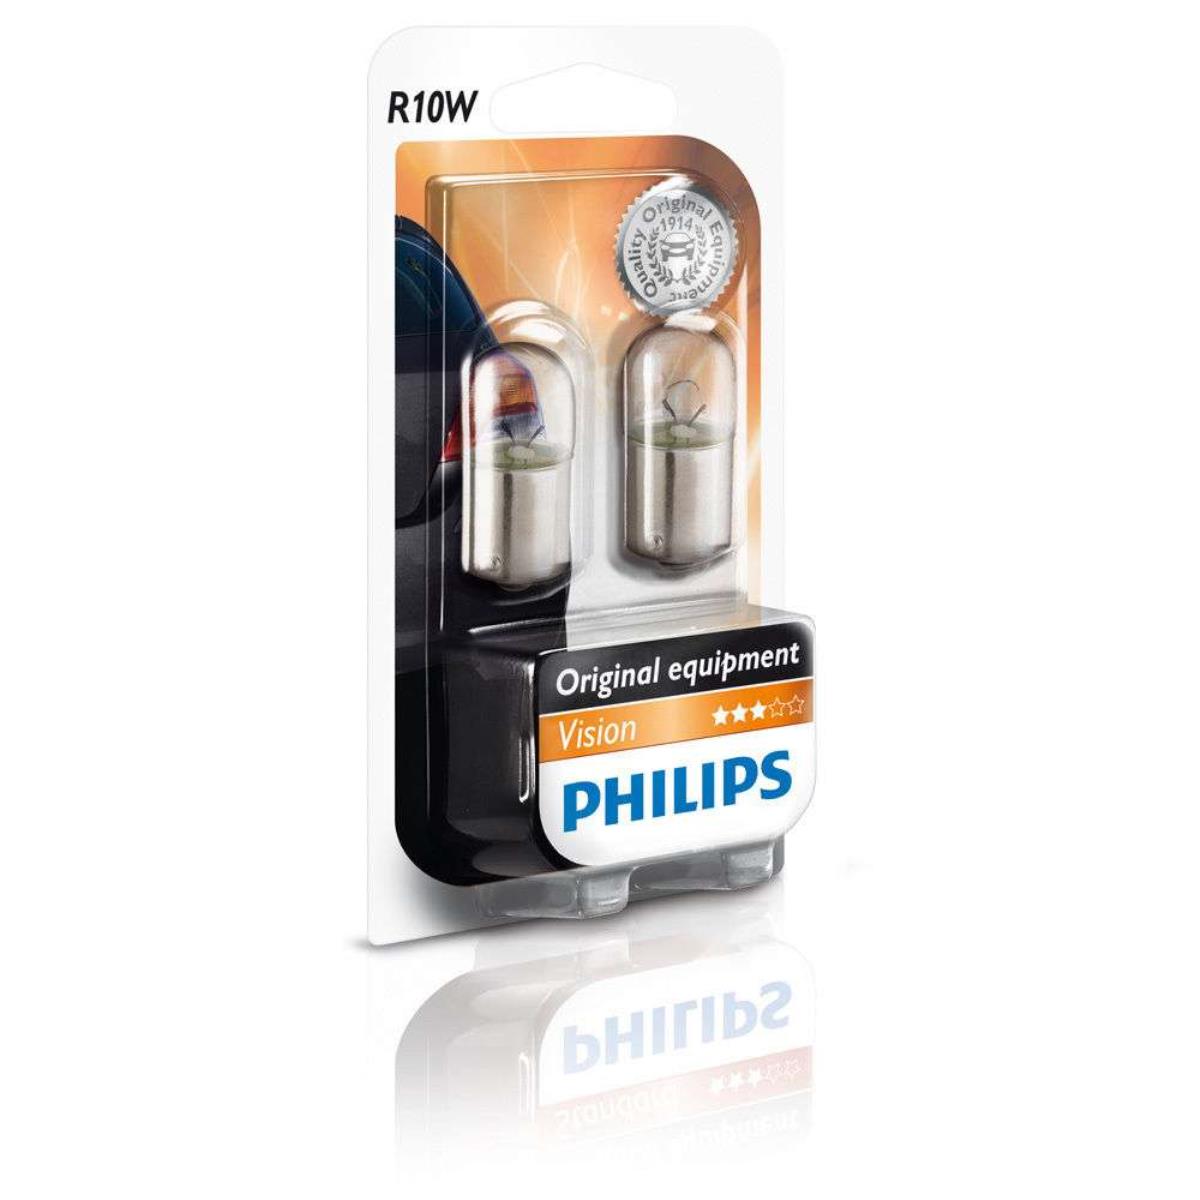 Philips Vision 2st. R10W 12V 10W BA15s Blister Lampe Birne